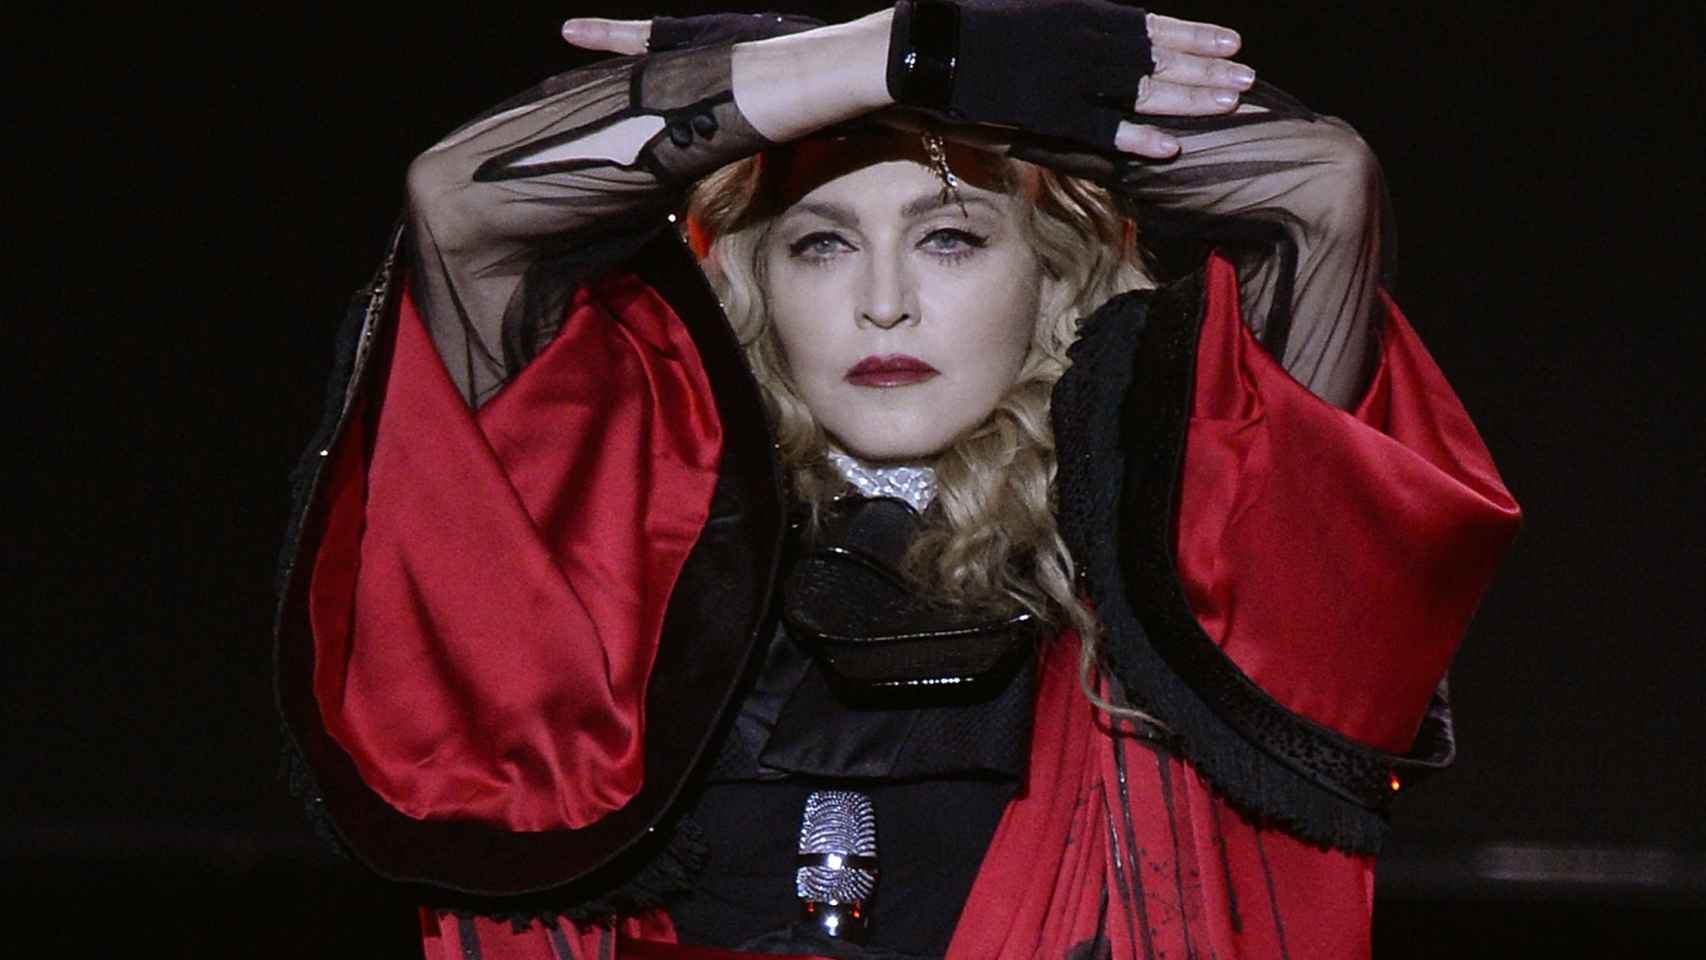 Un fan de Madonna consiguió cogerle un refresco de la nevera